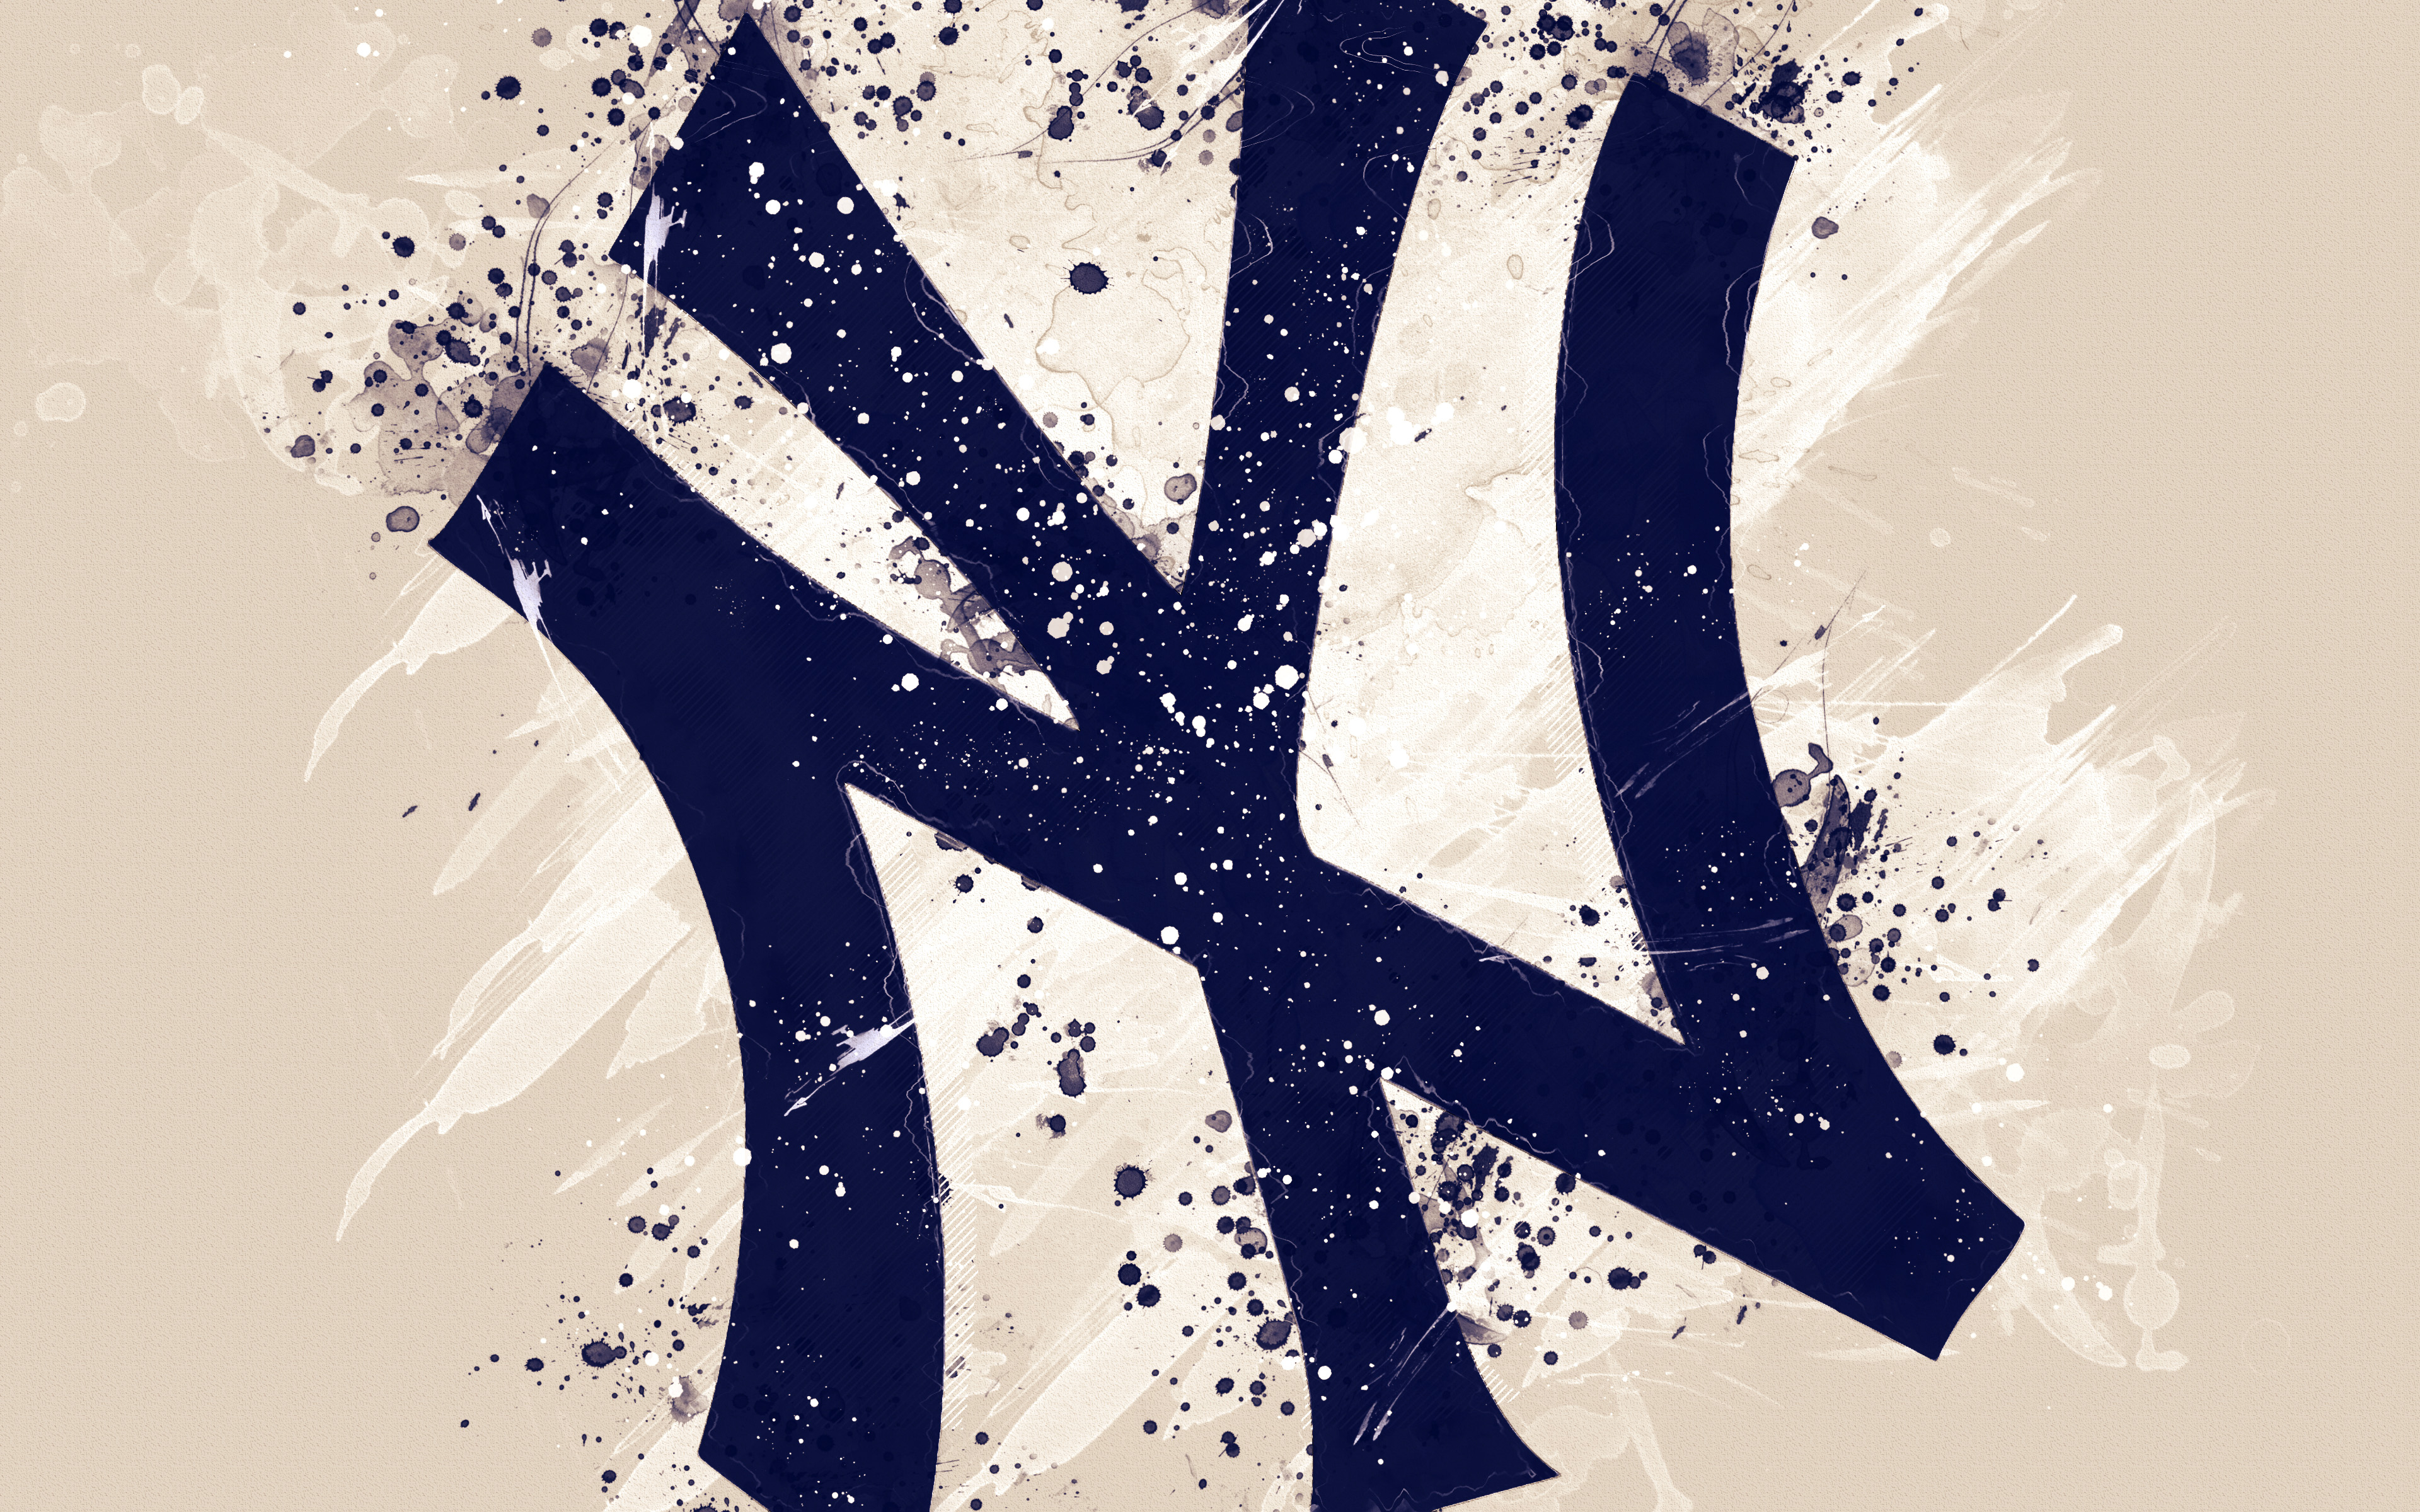 New York Yankees 4k Ultra HD Wallpaper